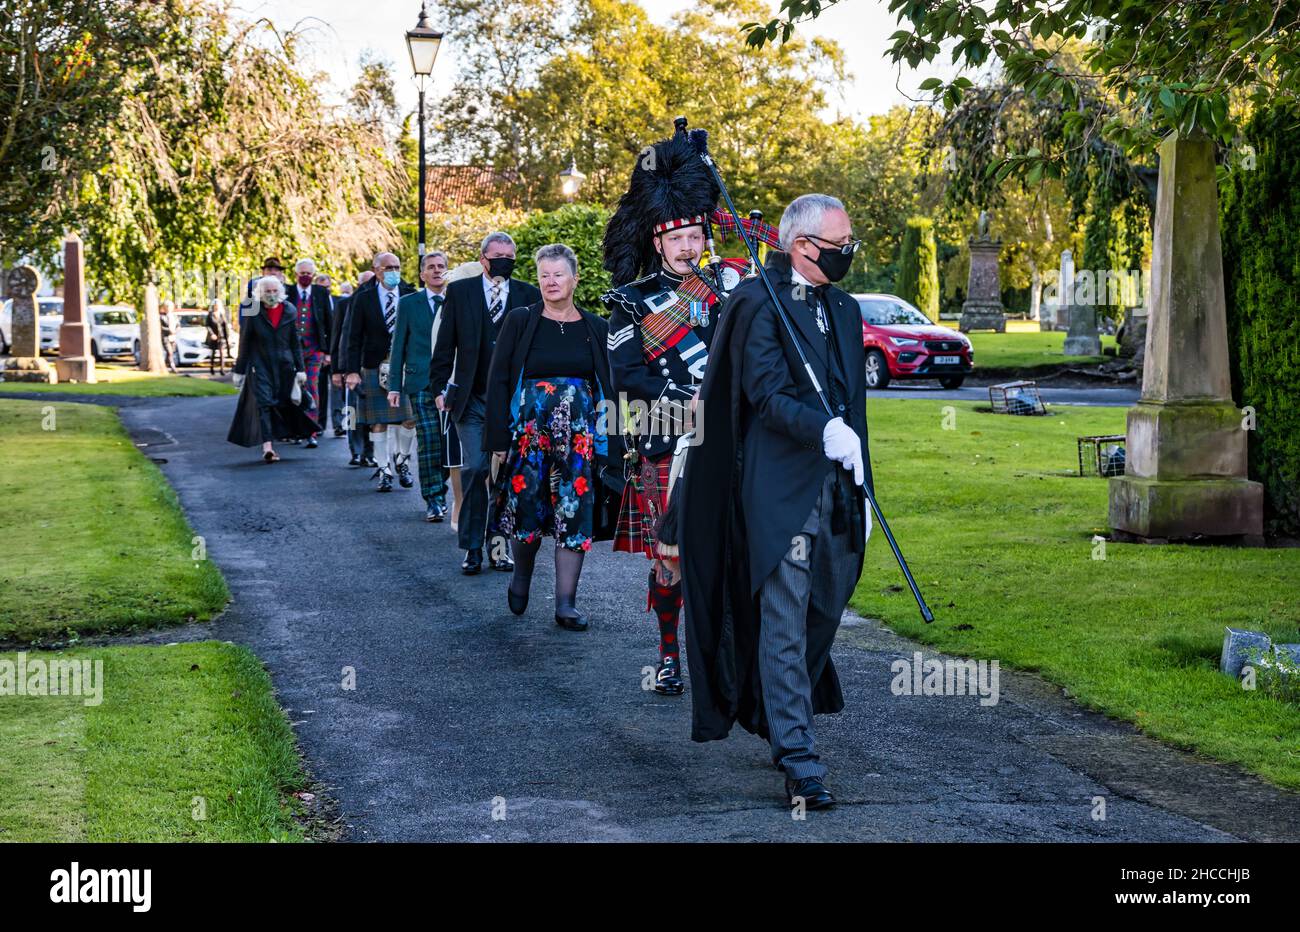 Postulantenprozession zur St. Mary's Parish Church beim Order of St John Festival, Haddington, East Lothian, Schottland, Großbritannien Stockfoto